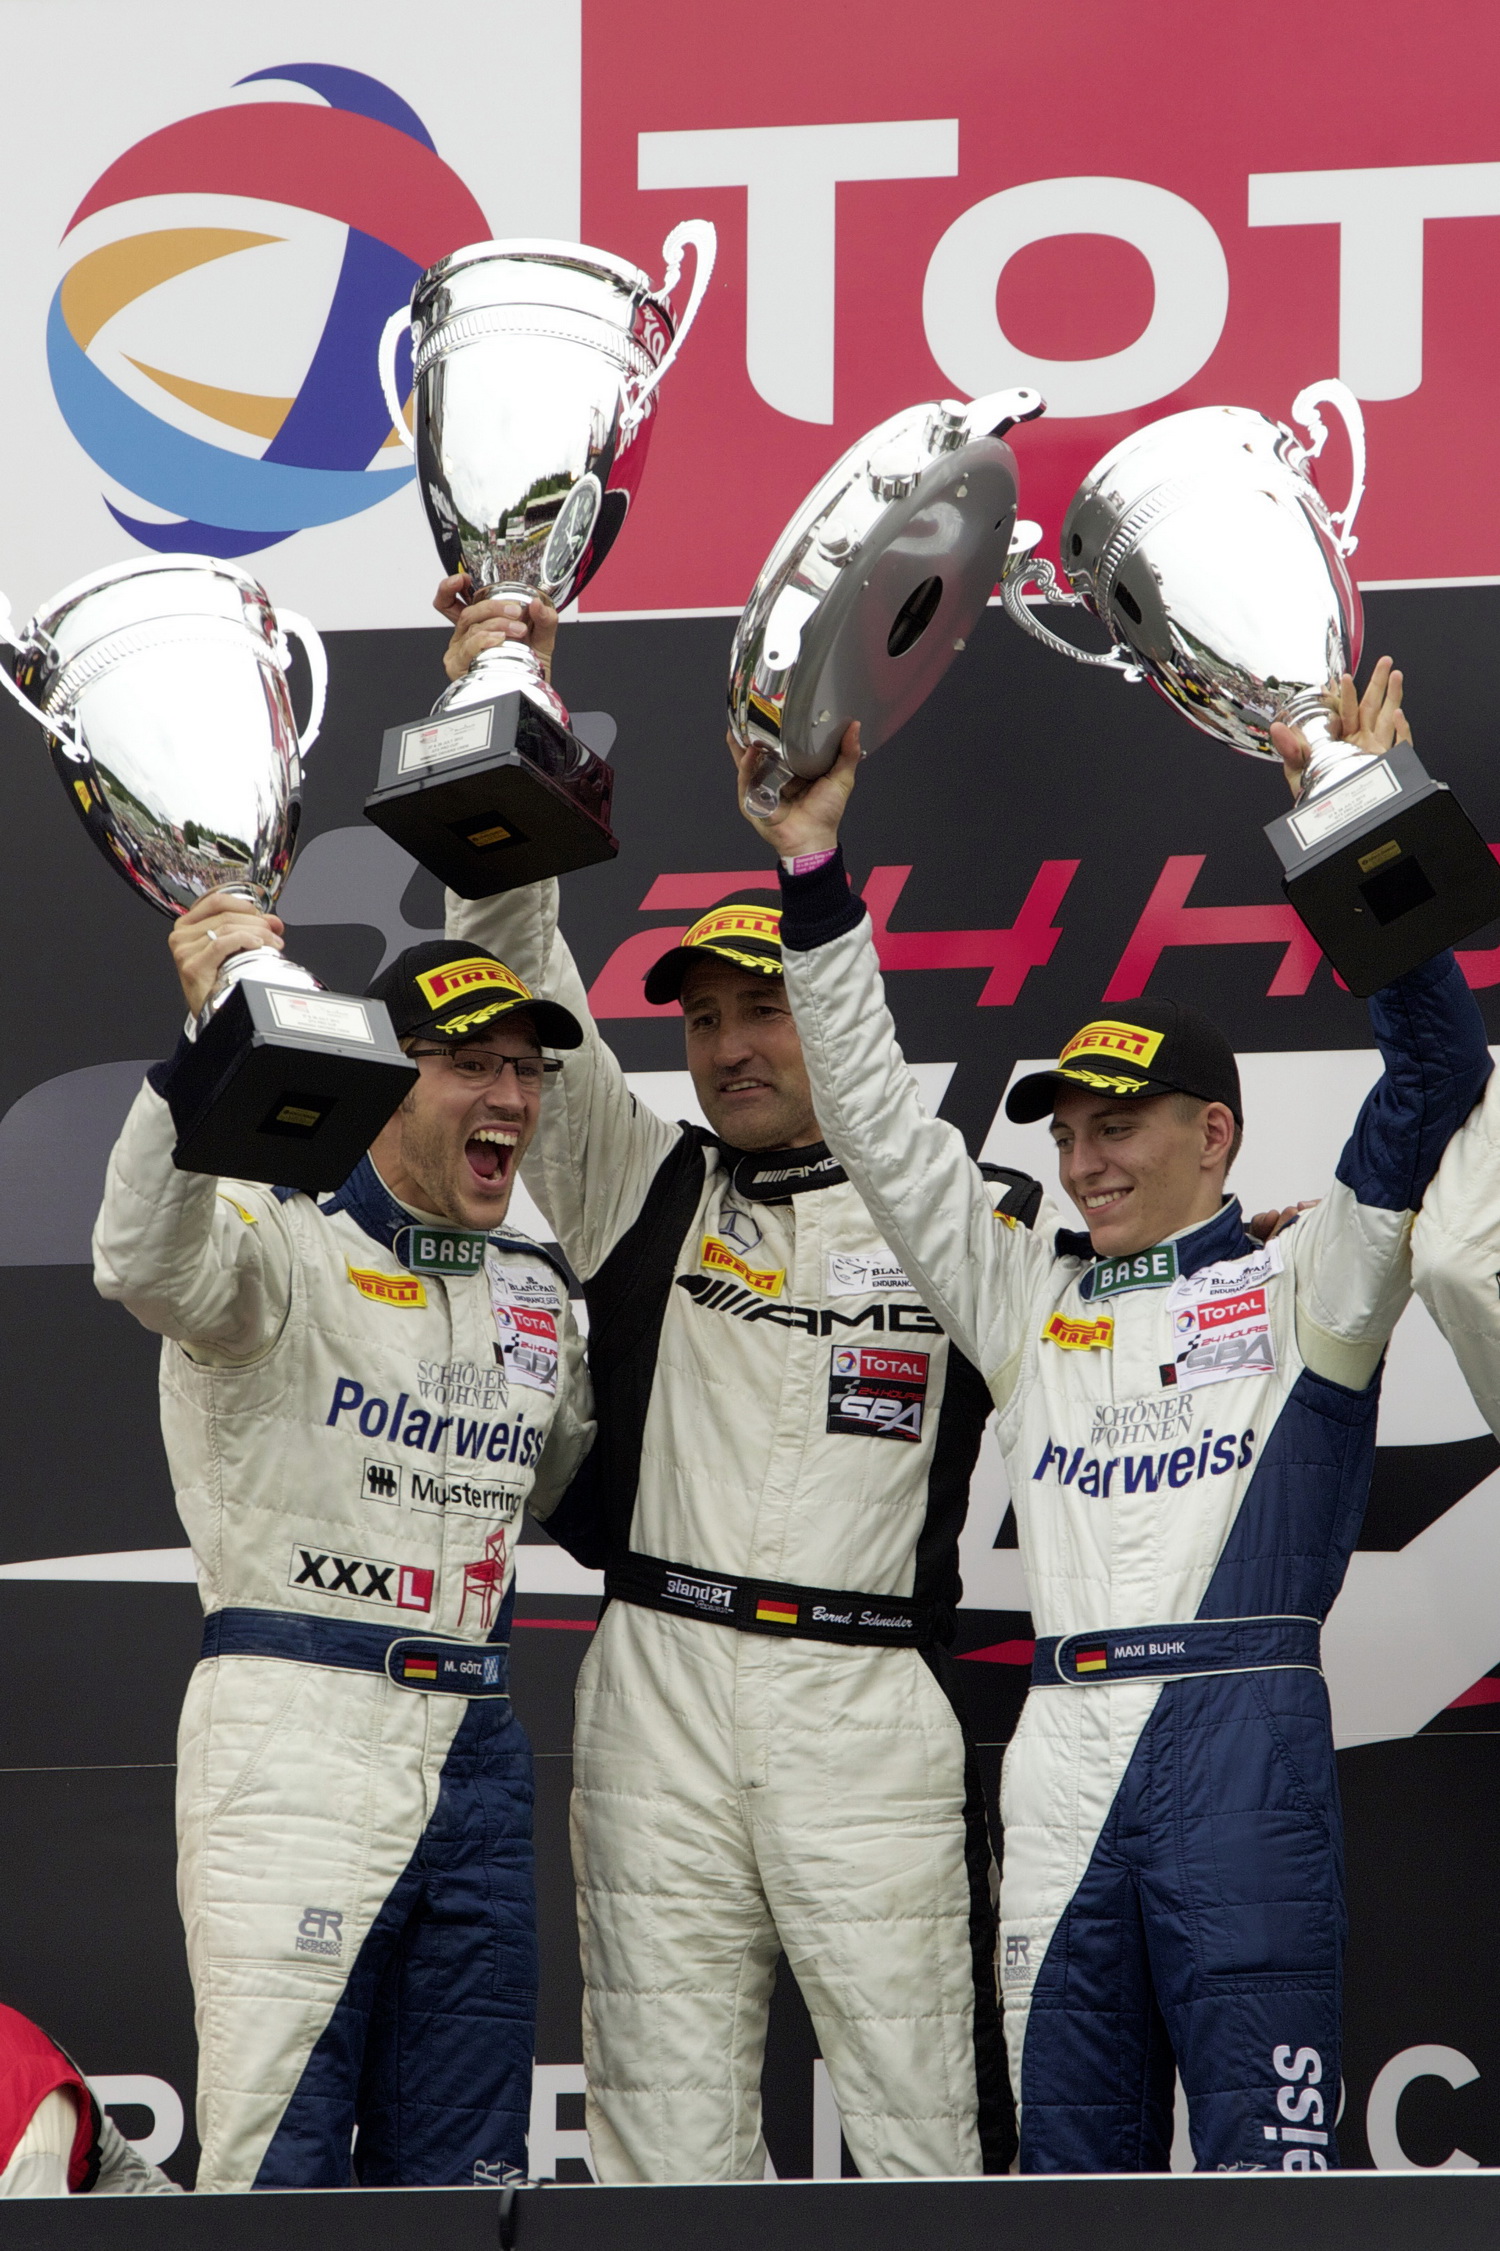 AMG品牌大使Bernd Schneider曾於1995、2000、2001、2003、2006年駕駛由AMG所打造的賽車奪得五次德國DTM德國房車大師賽冠軍.jpg